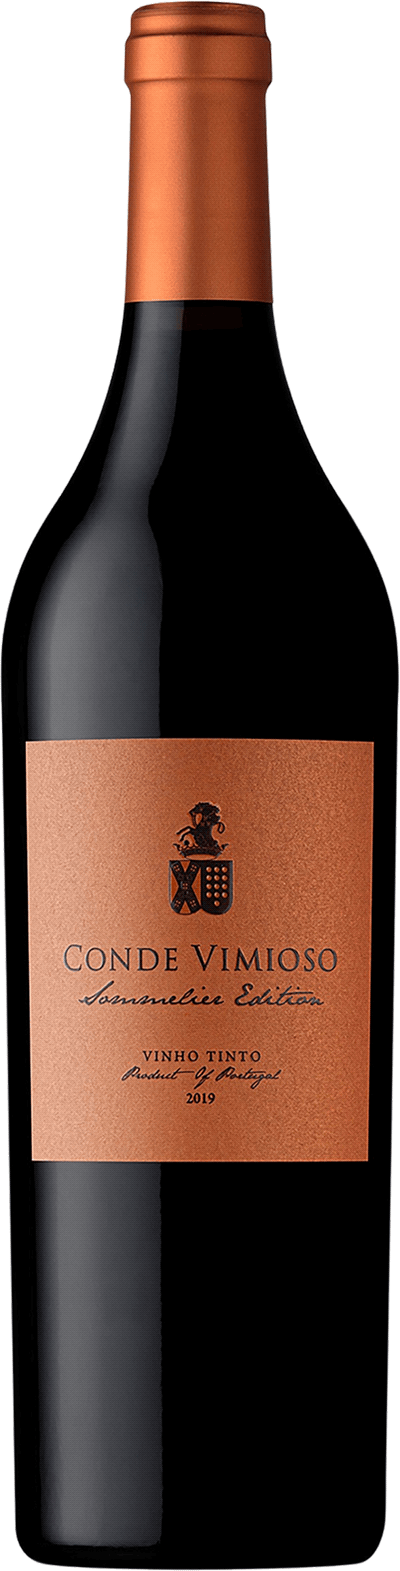 Conde Vimioso Sommelier Edition Tinto, 2019